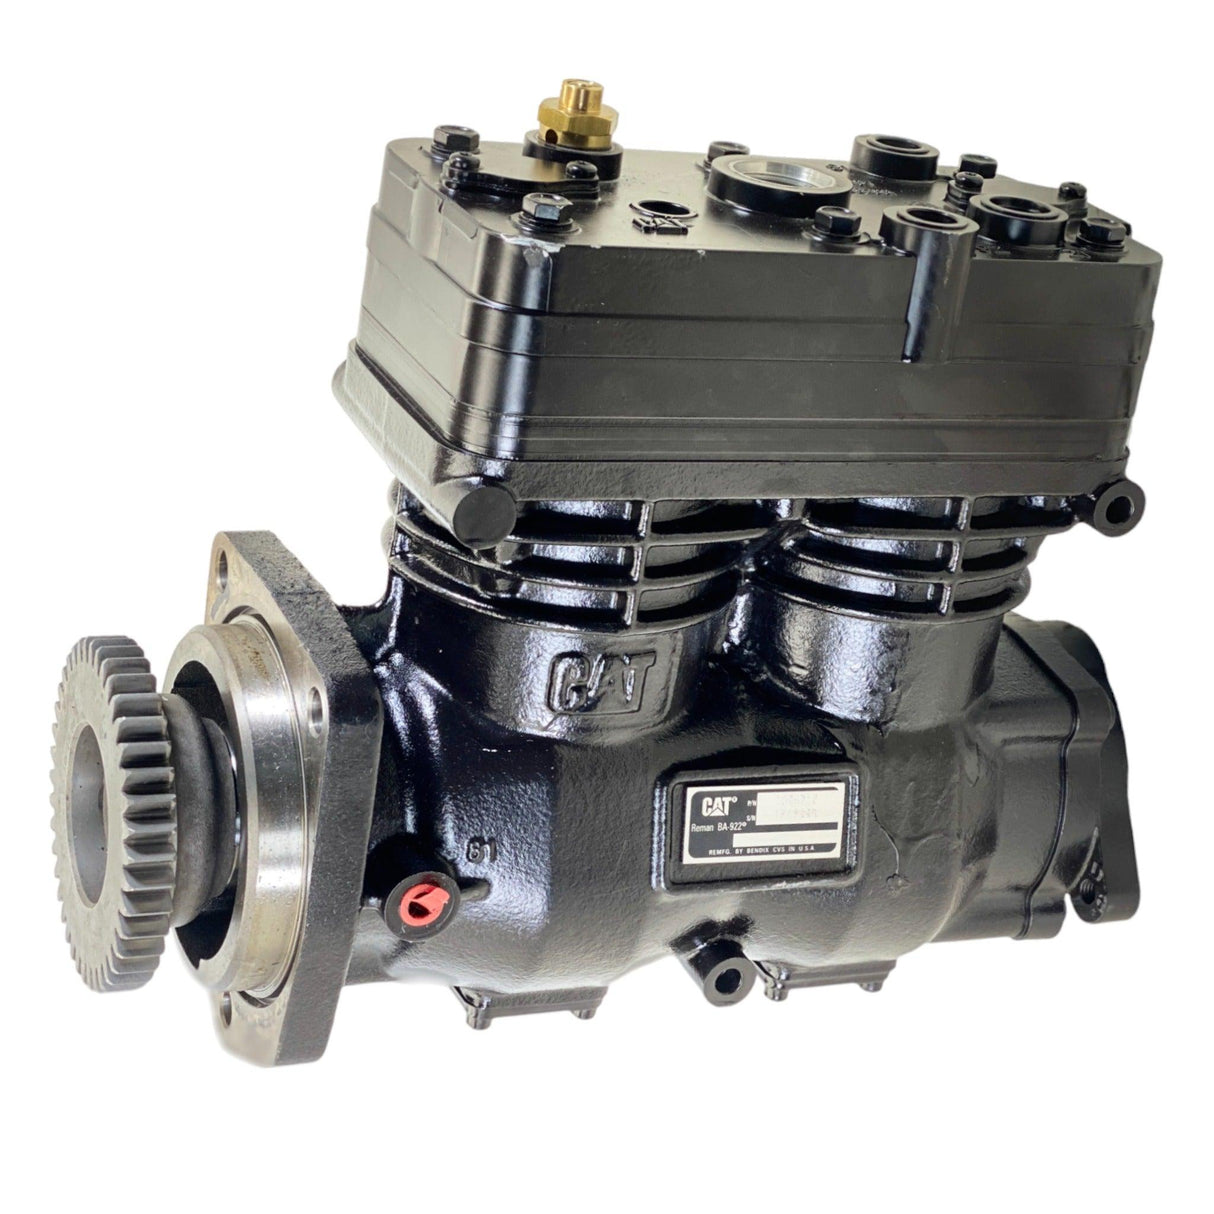 745-5013059X Genuine Mack Air Brake Compressor BA-922 Twin Cylinder